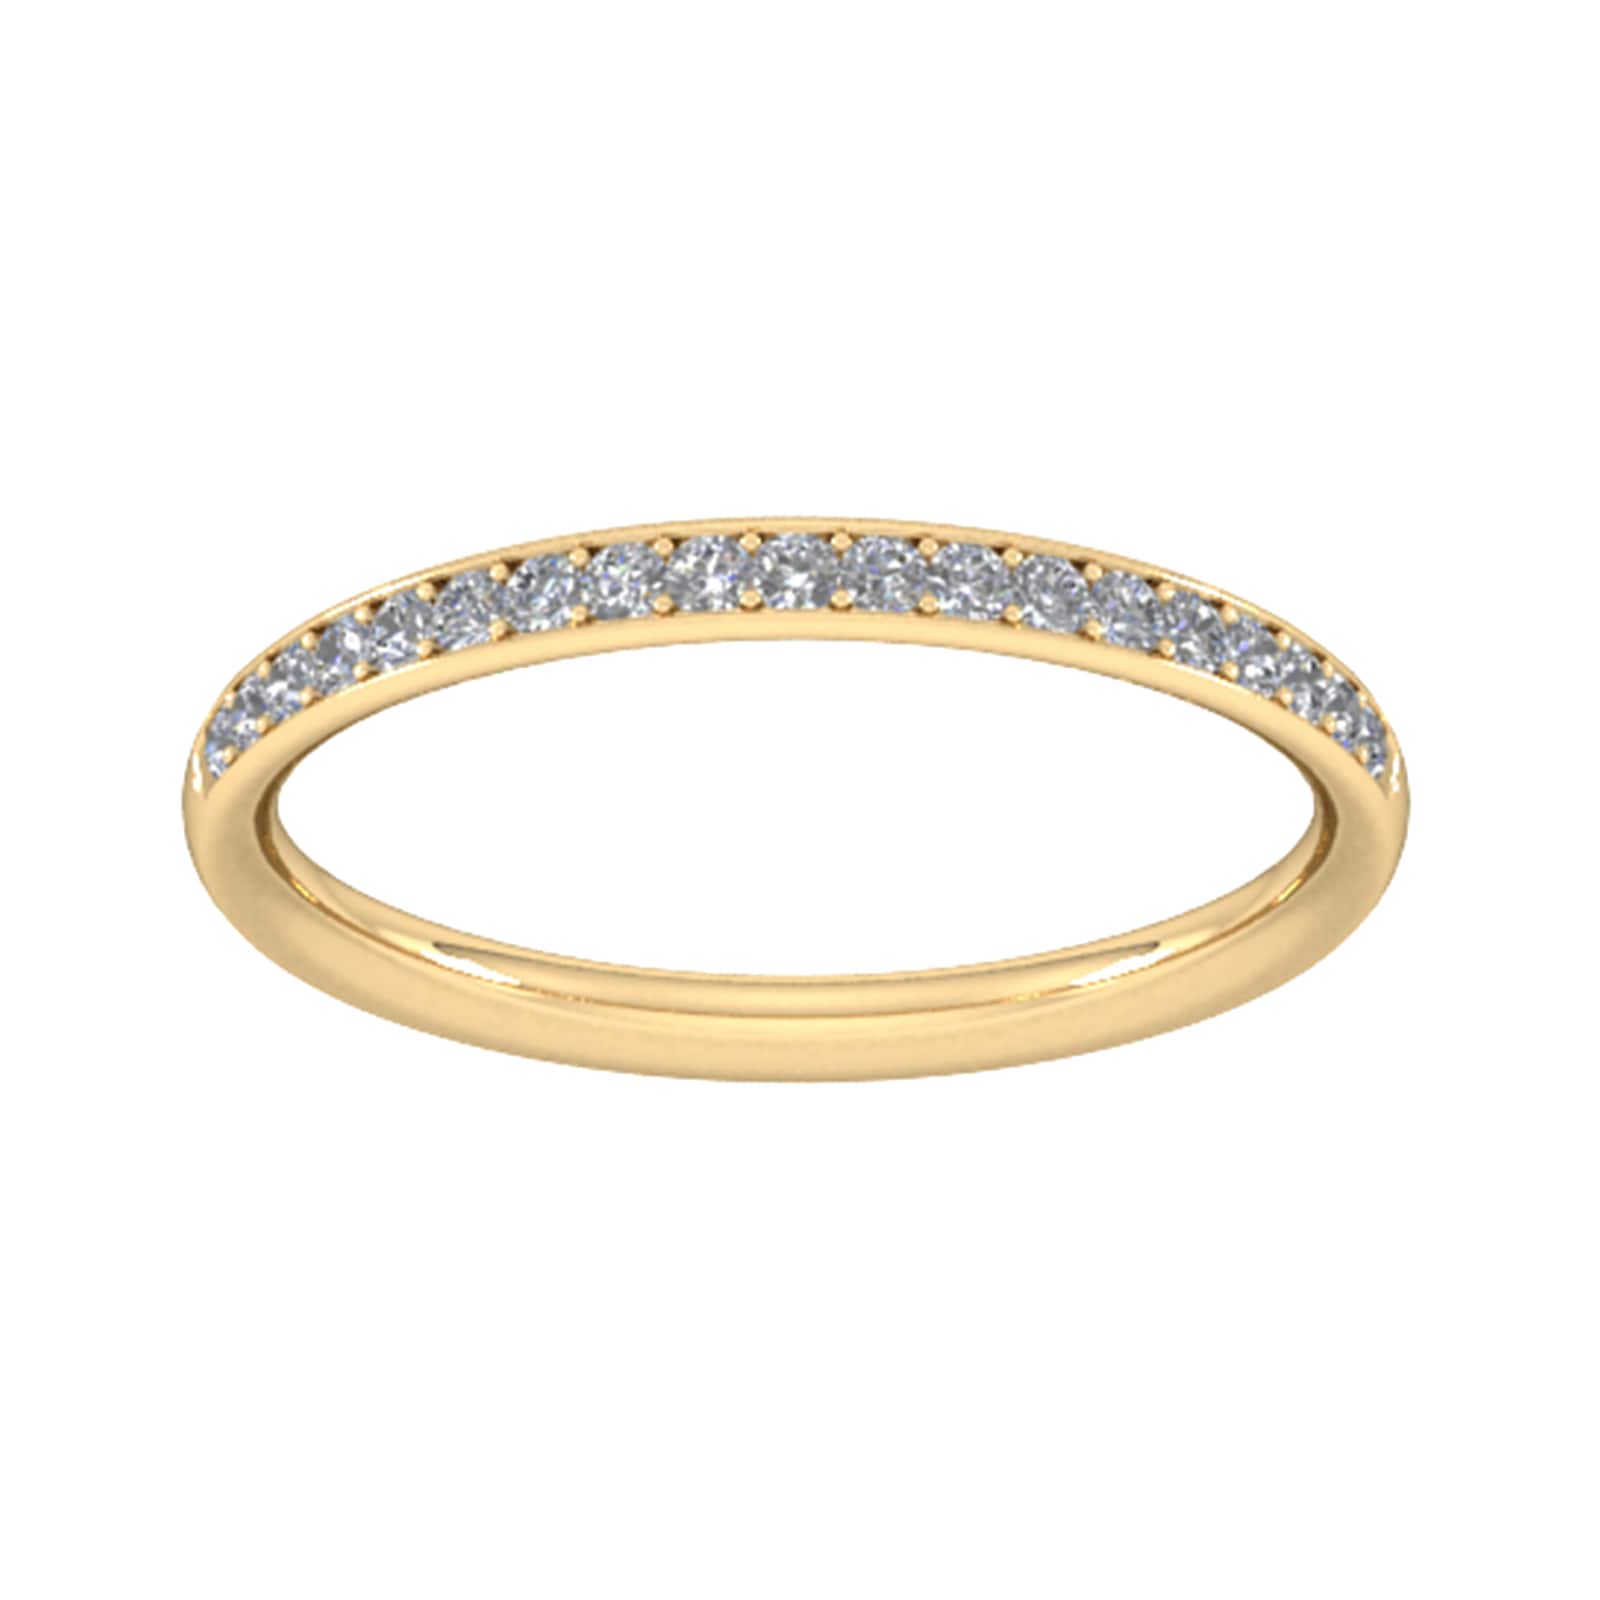 0.18 Carat Total Weight Brilliant Cut Grain Set Diamond Wedding Ring In 9 Carat Yellow Gold - Ring Size U